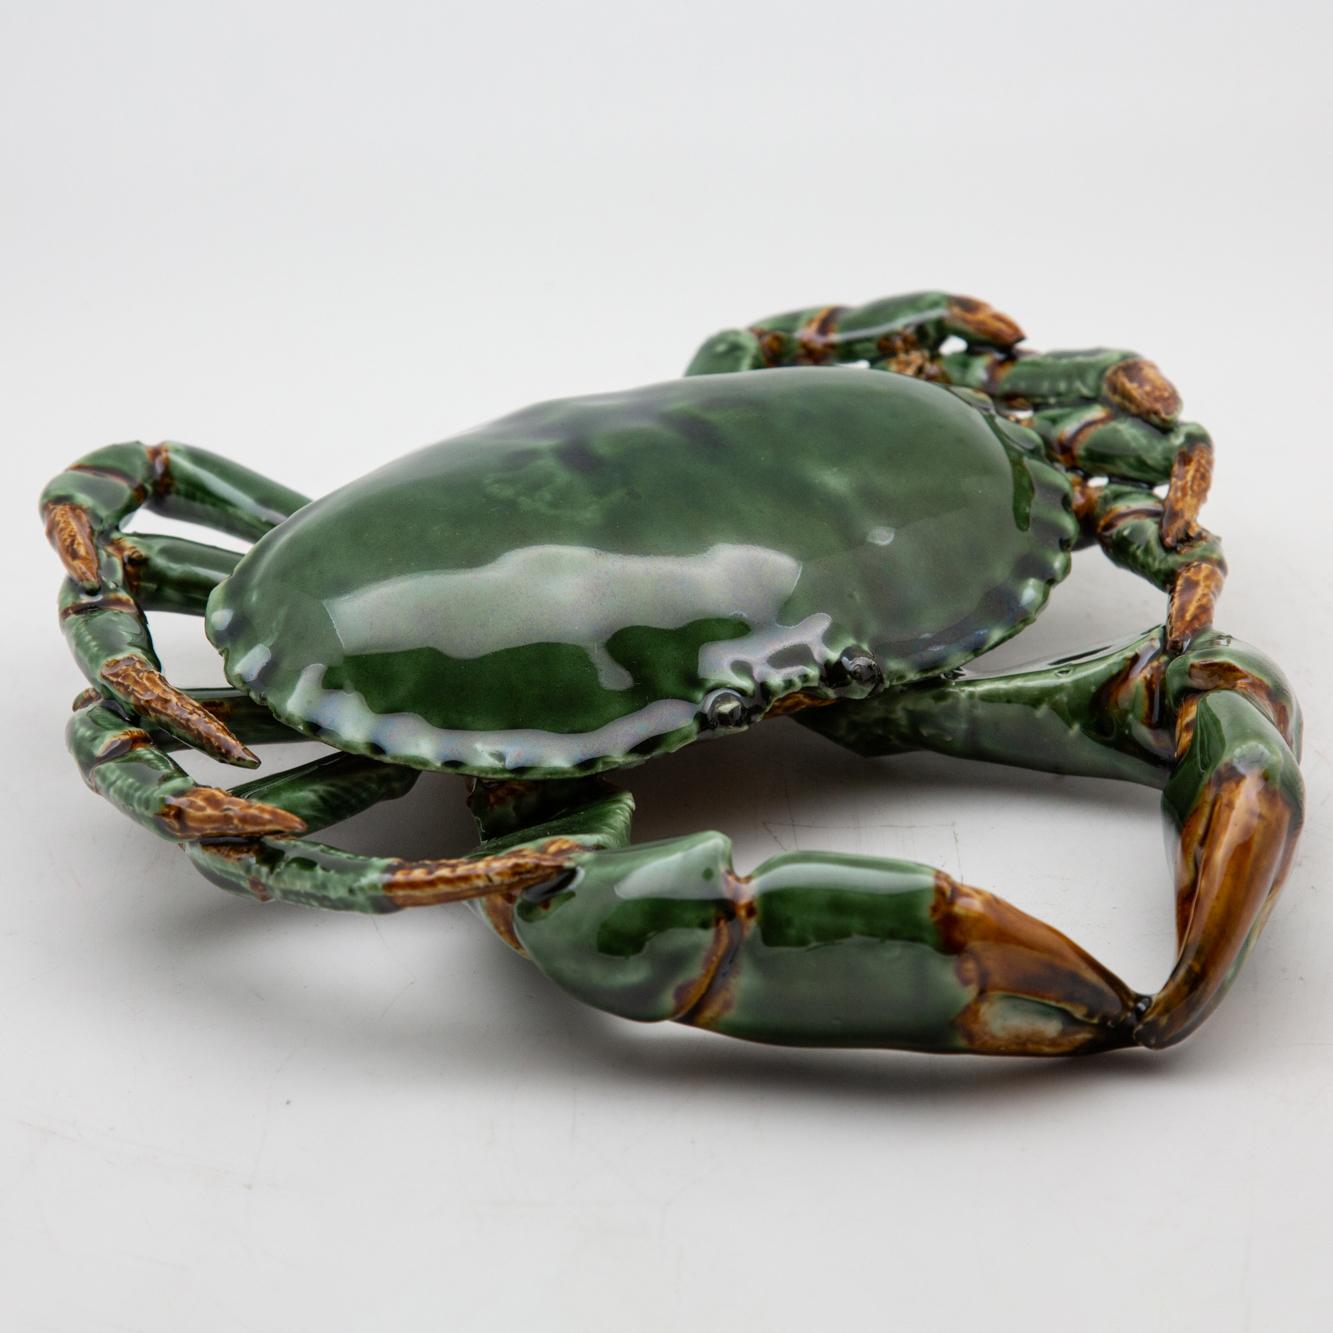 Portuguese Handmade Pallissy or Majollica Green Ceramic Crab 1